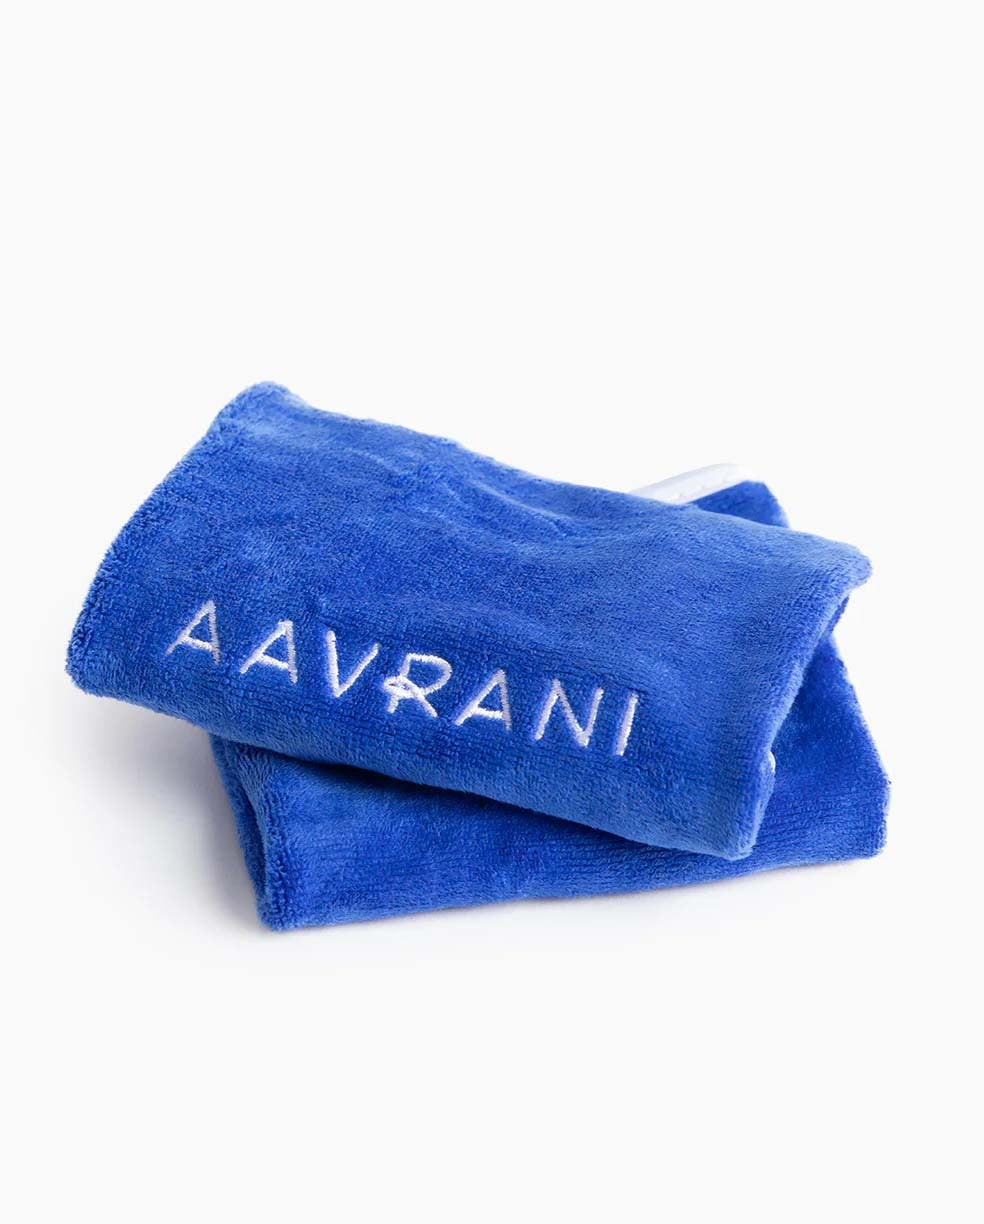 AAVRANI Face Towel Set against grey background